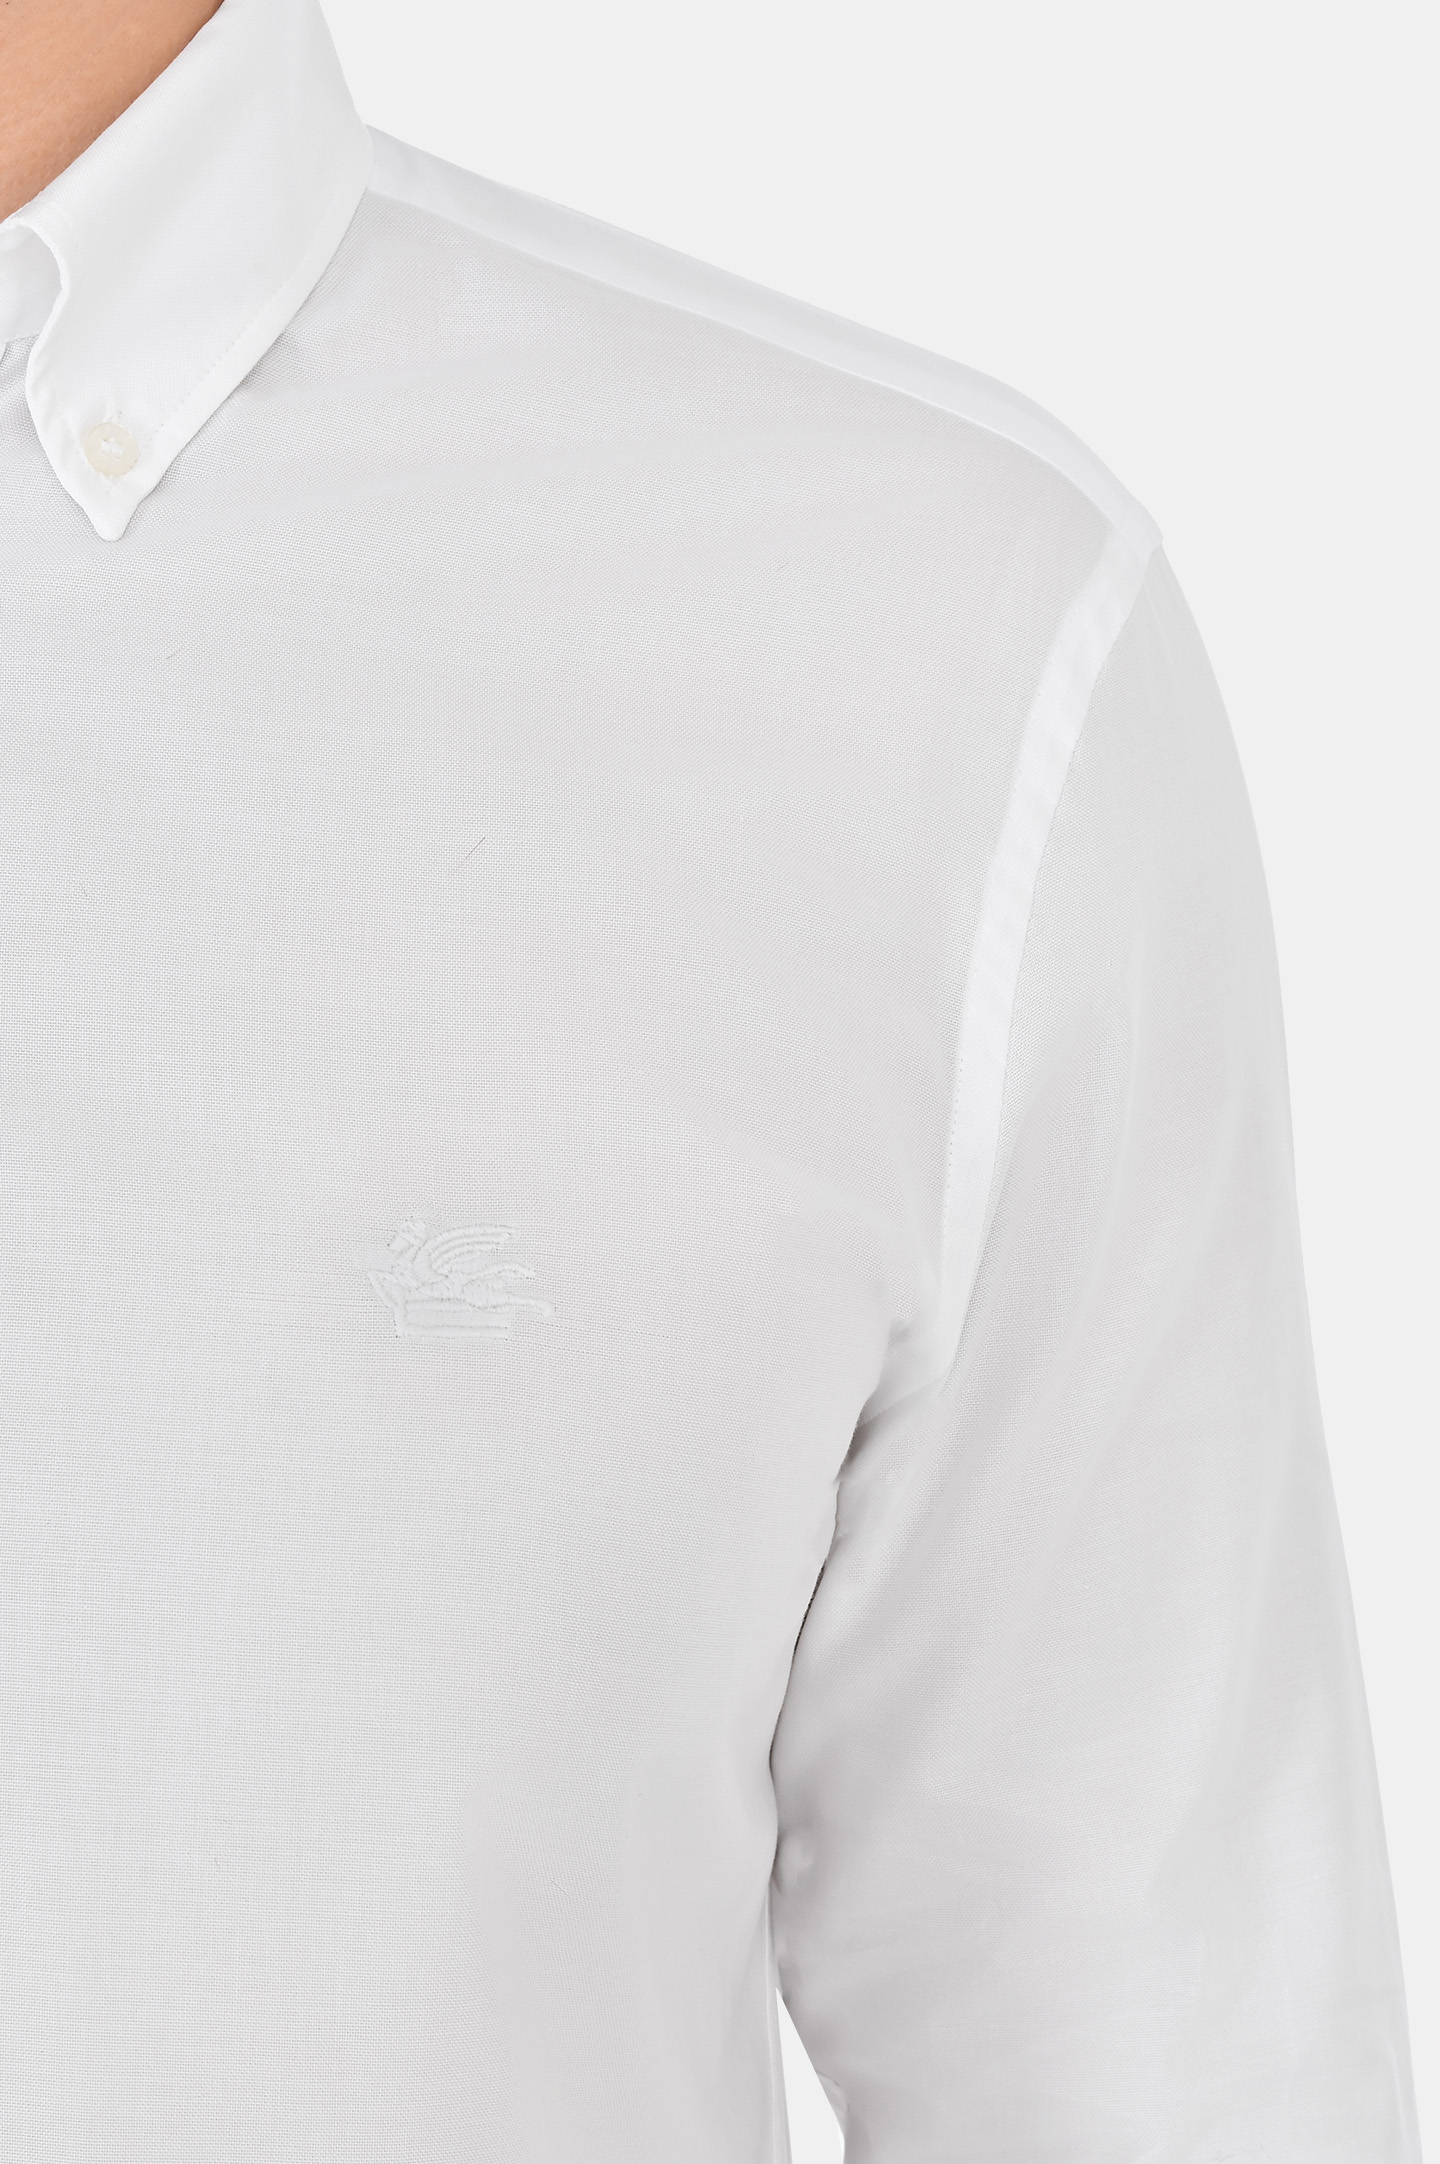 Хлопковая рубашка ETRO MRIB0004 AV201, цвет: Белый, Мужской